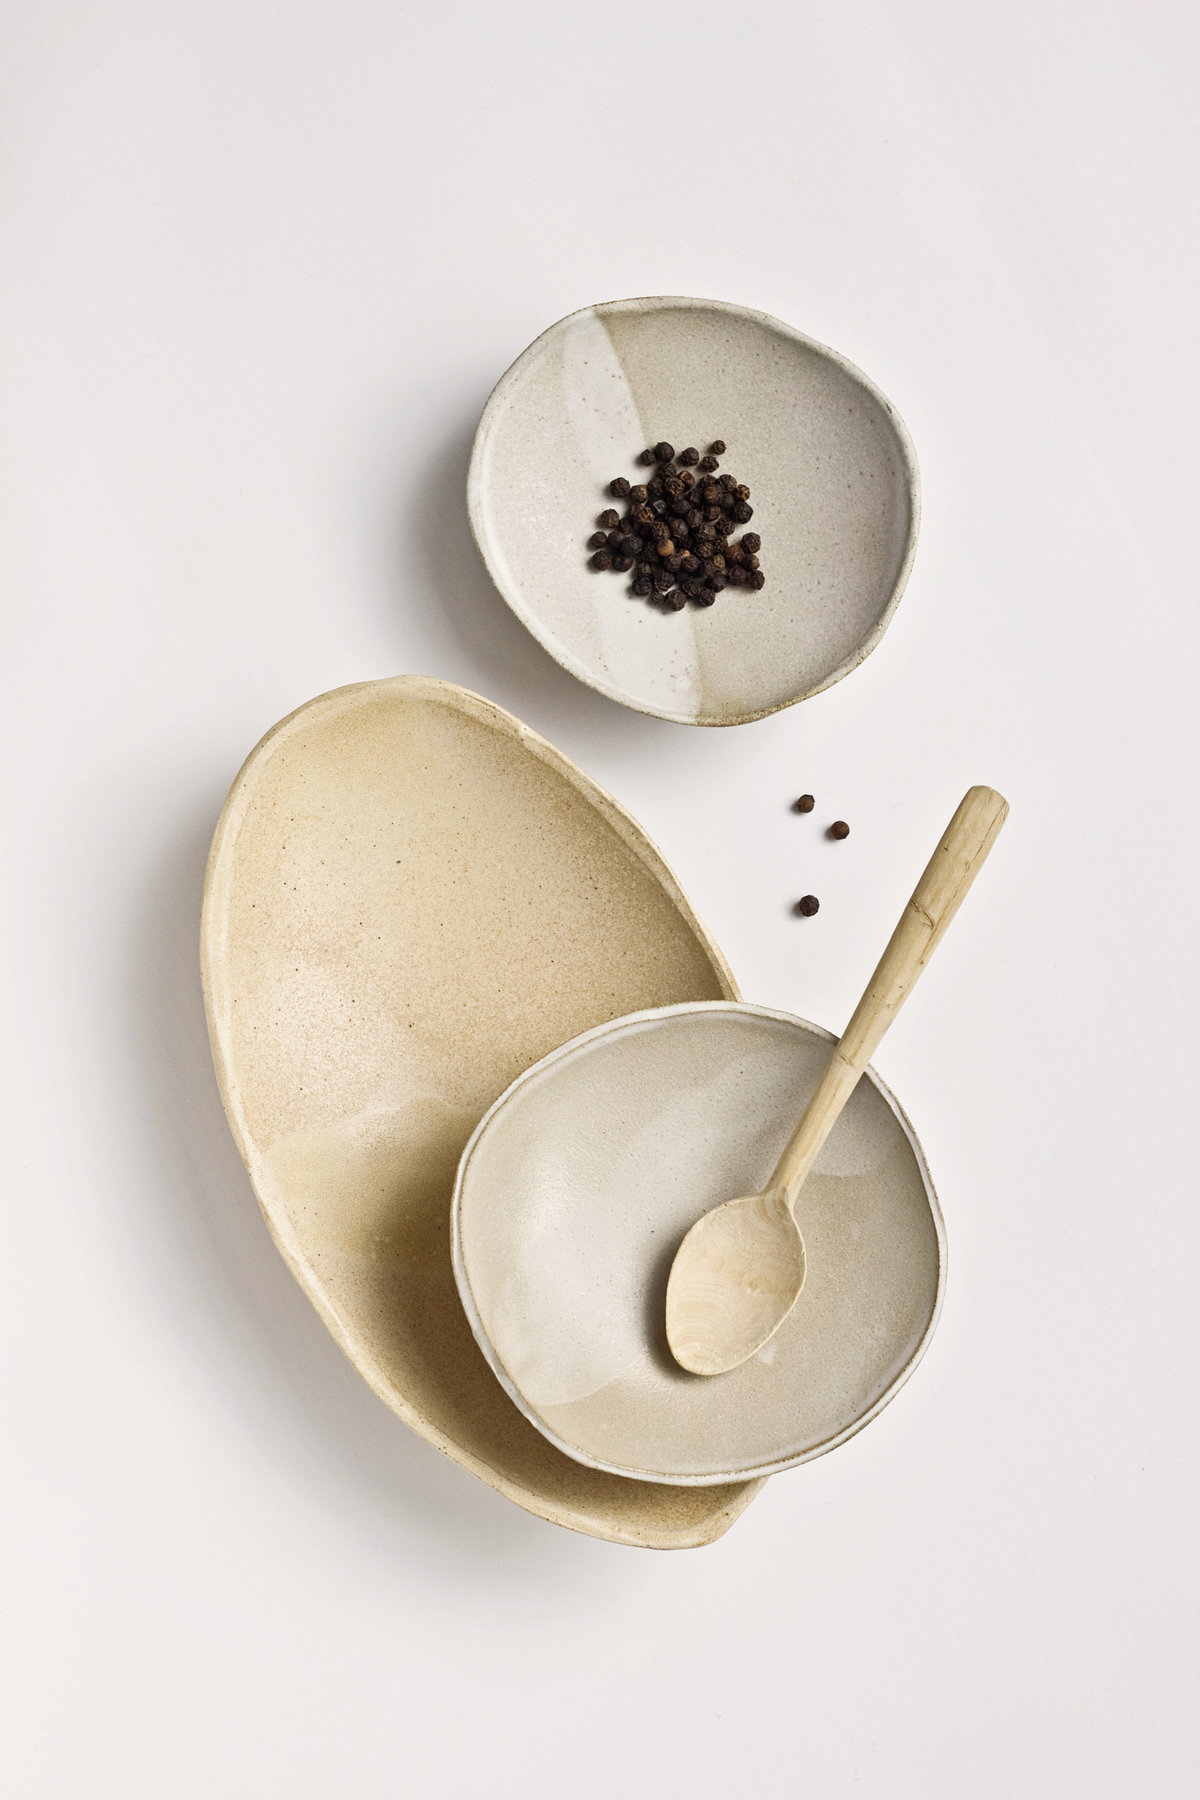 Yasha-Butler-Ceramics-Tableware-Plate-White-Sandstone-18-3500px